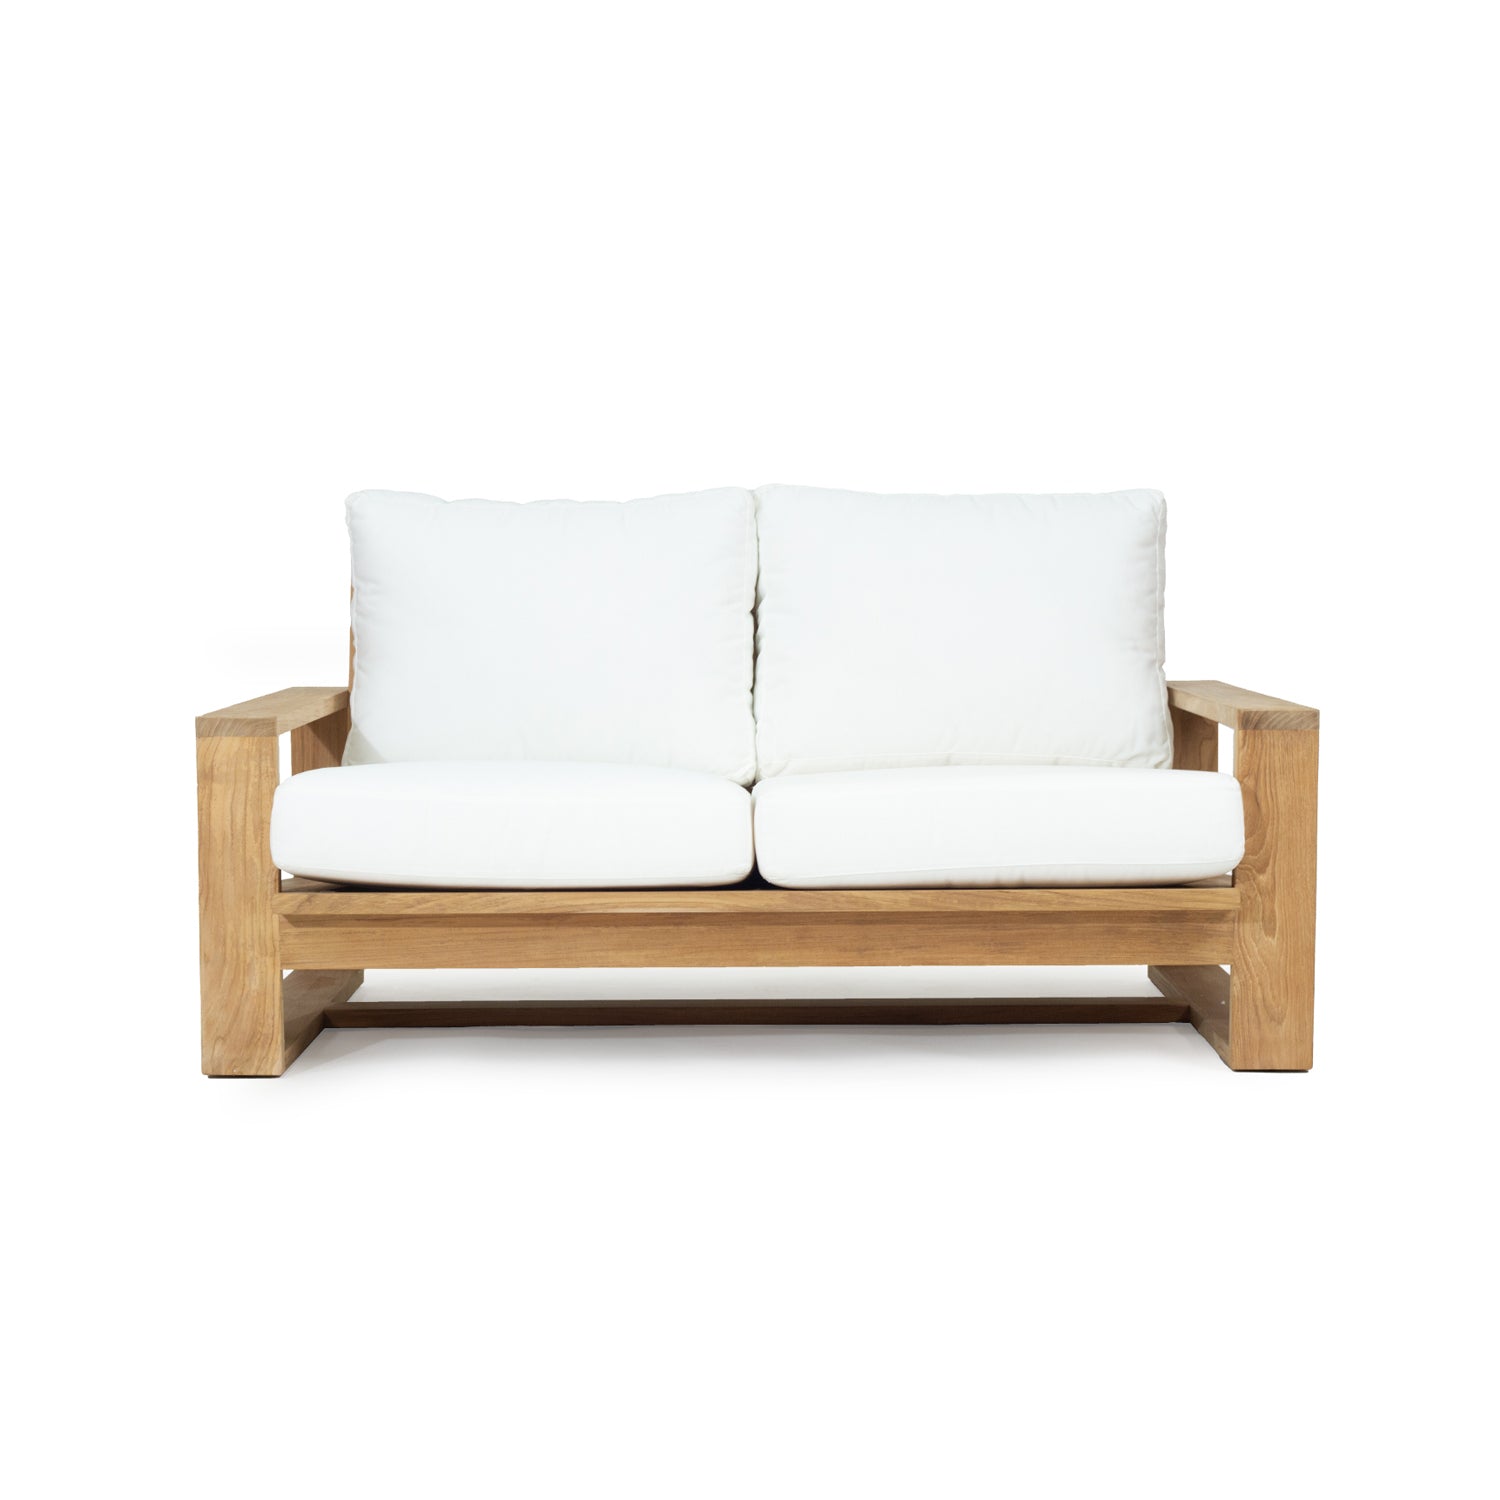 Gattels Outdoor Solid Teak 2 Seater Sofa - Canvas Natural - Notbrand